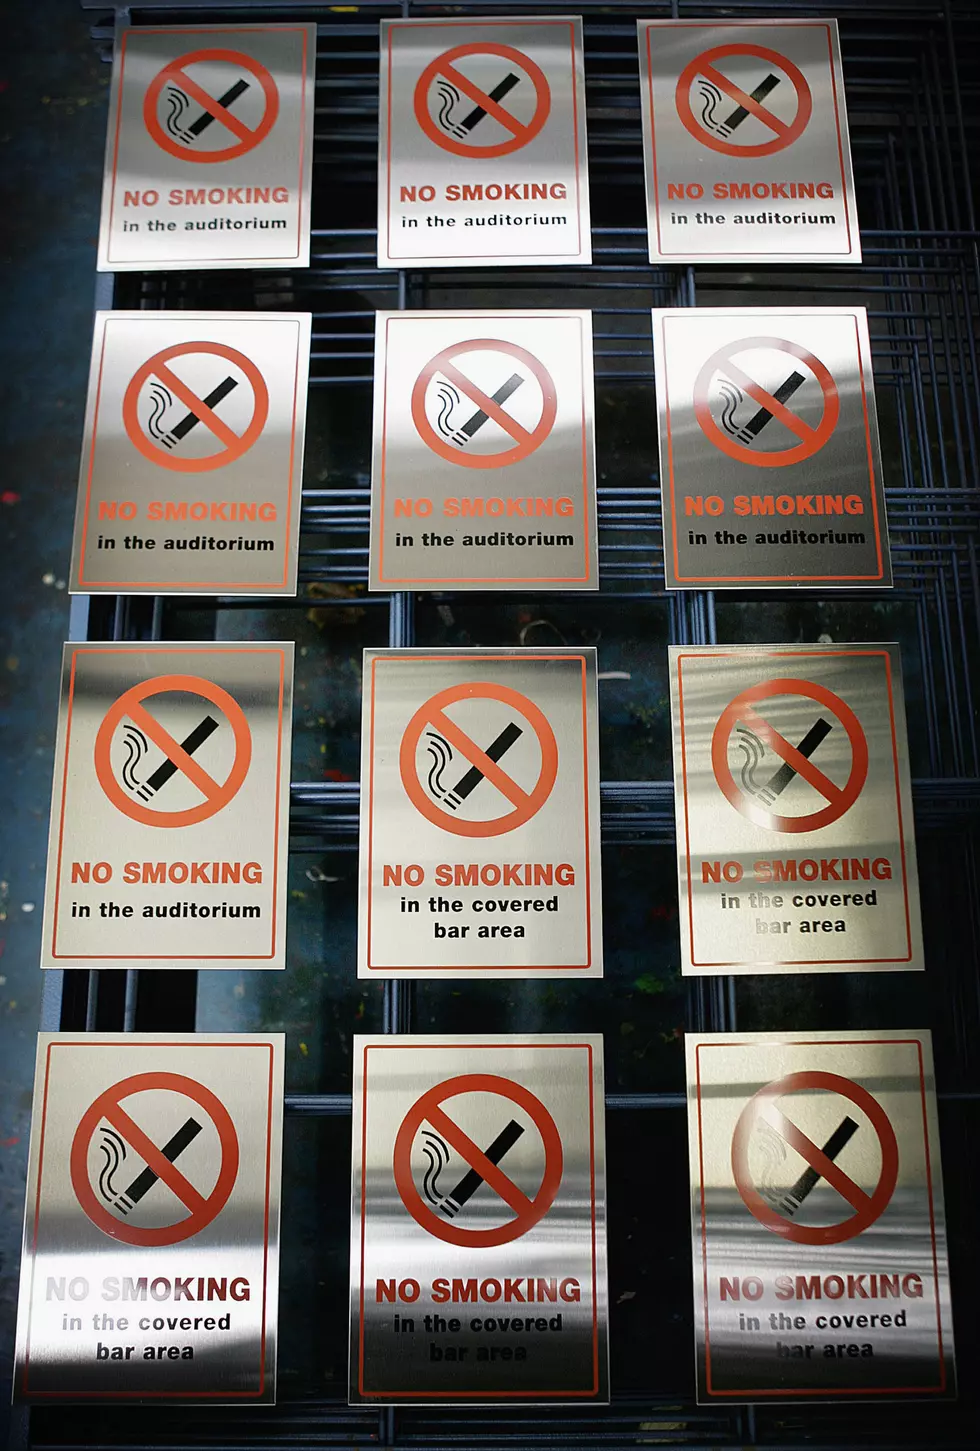 No Smoking Signs May Actually Encourage Smokers to Light Up